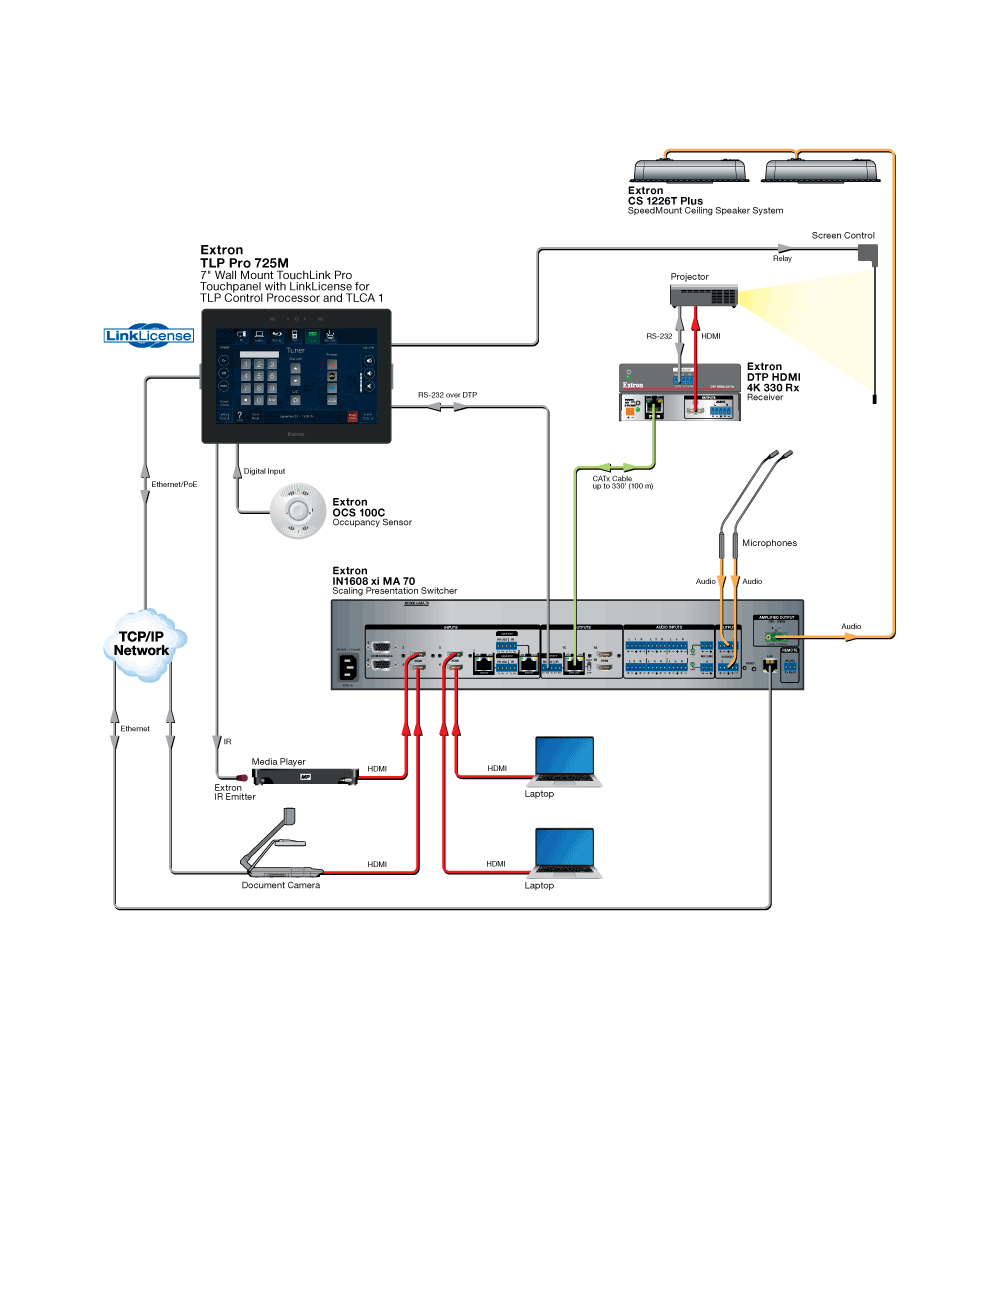 LinkLicense for TLP Control Processor Diagram